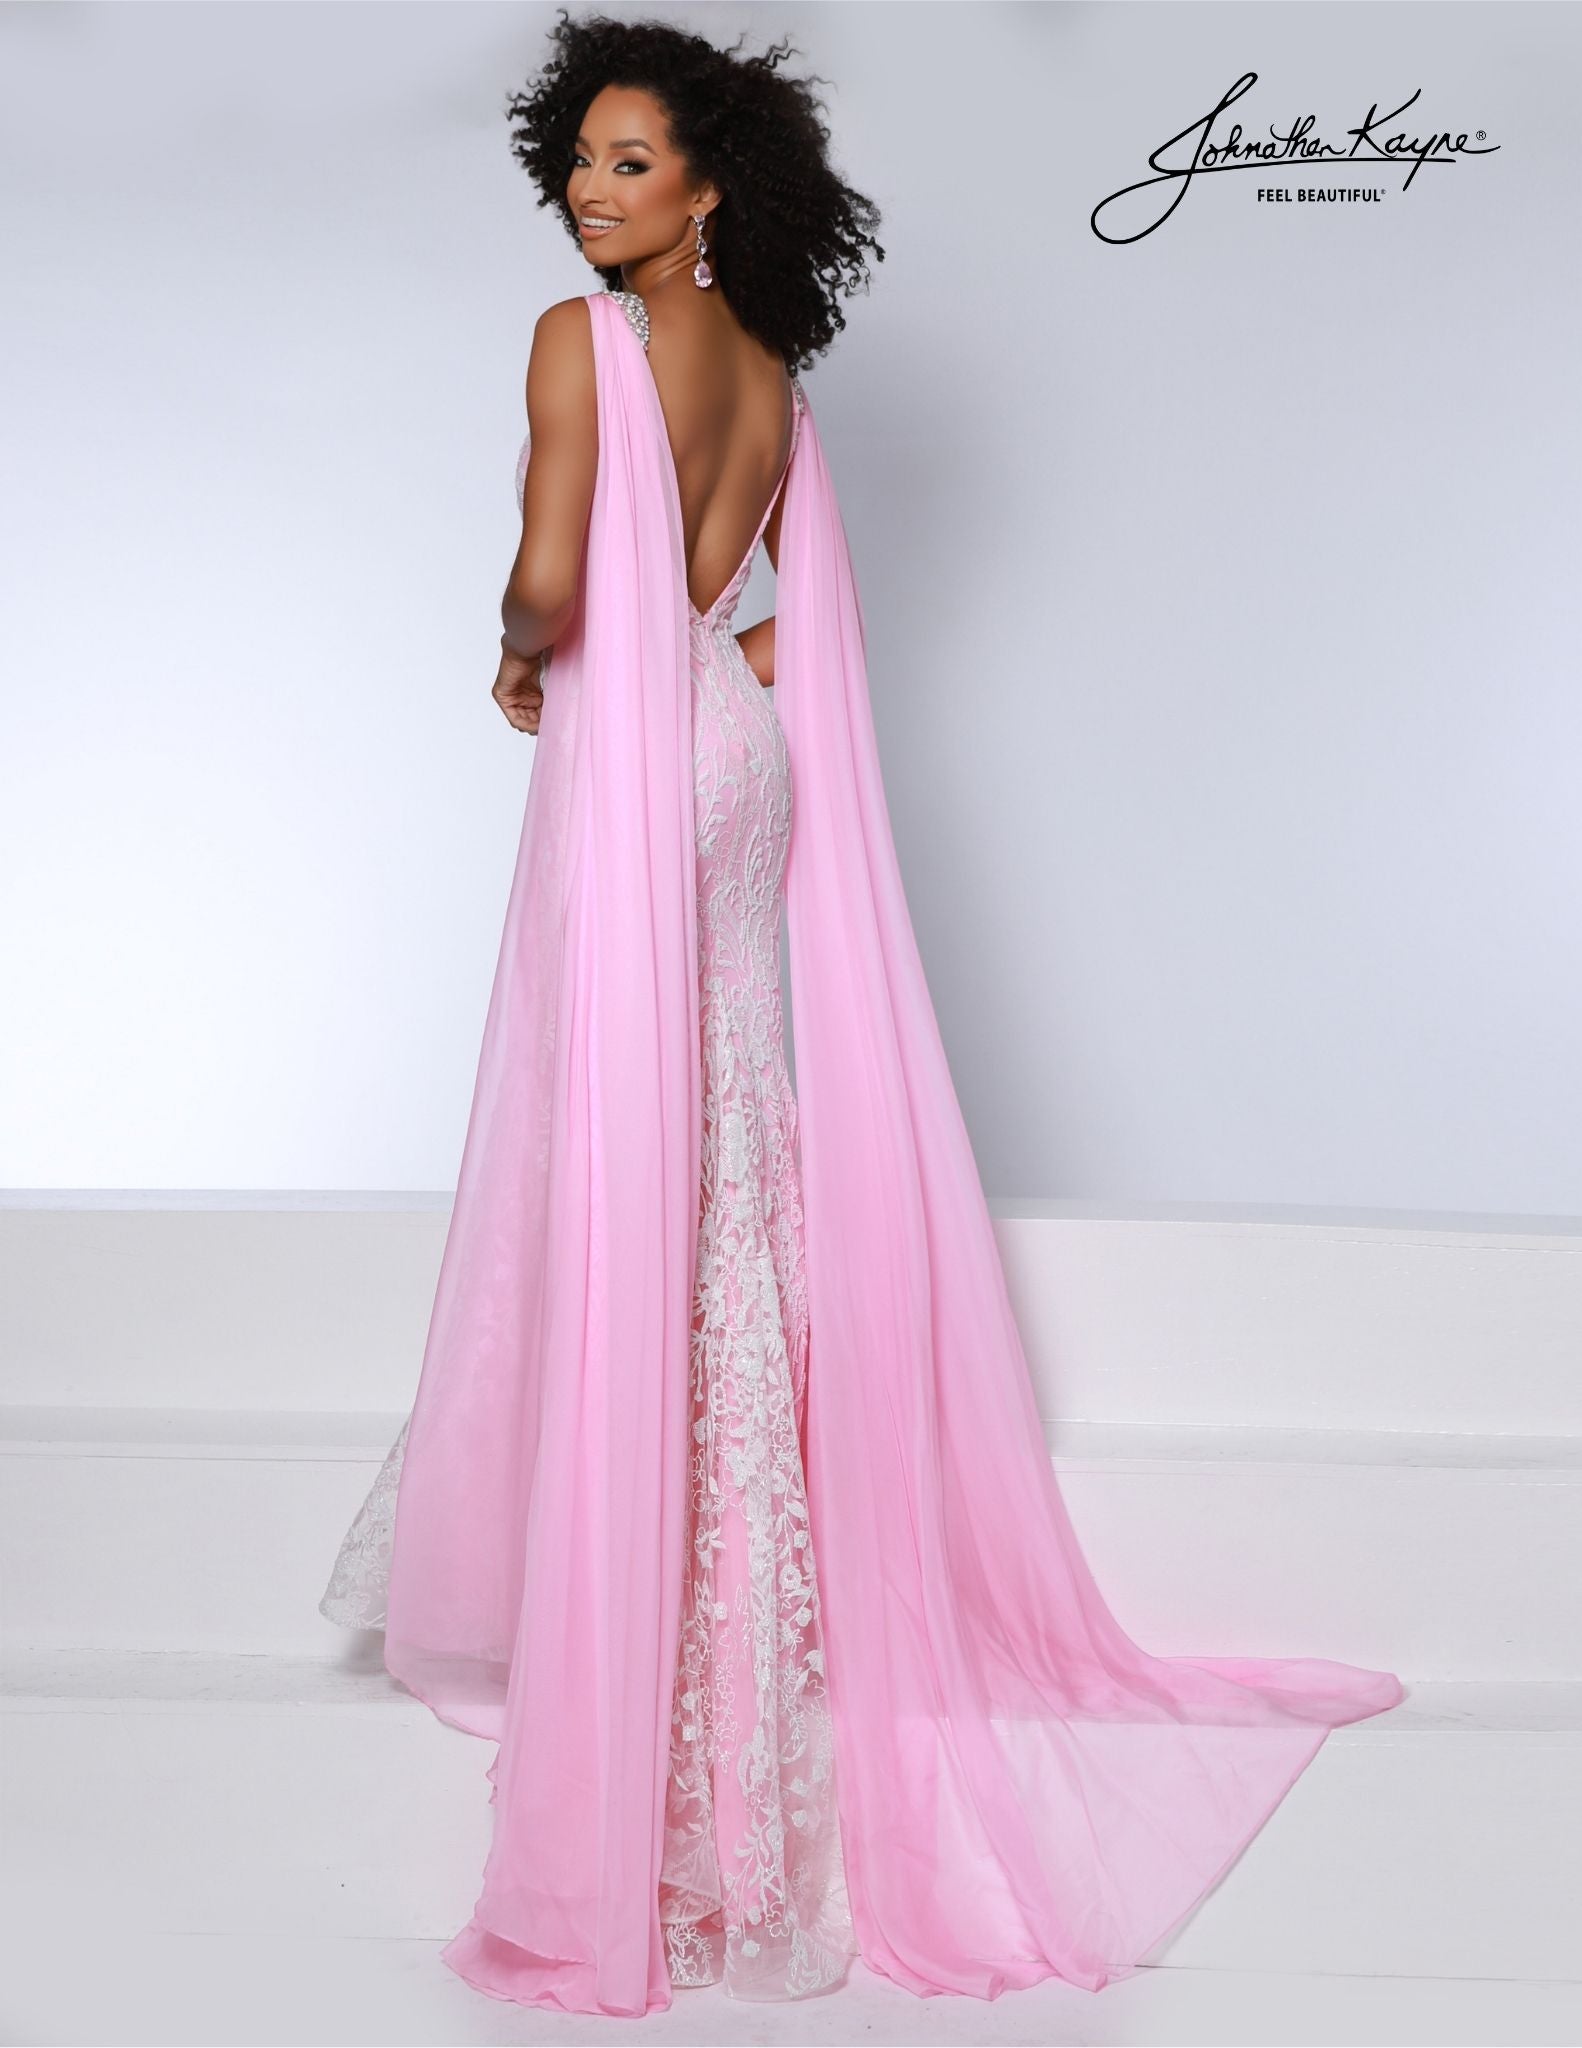 Cassandra Stone Pink NWT Long Formal Dress Women’s Size 12 V-Neck Fit Flare  Bead